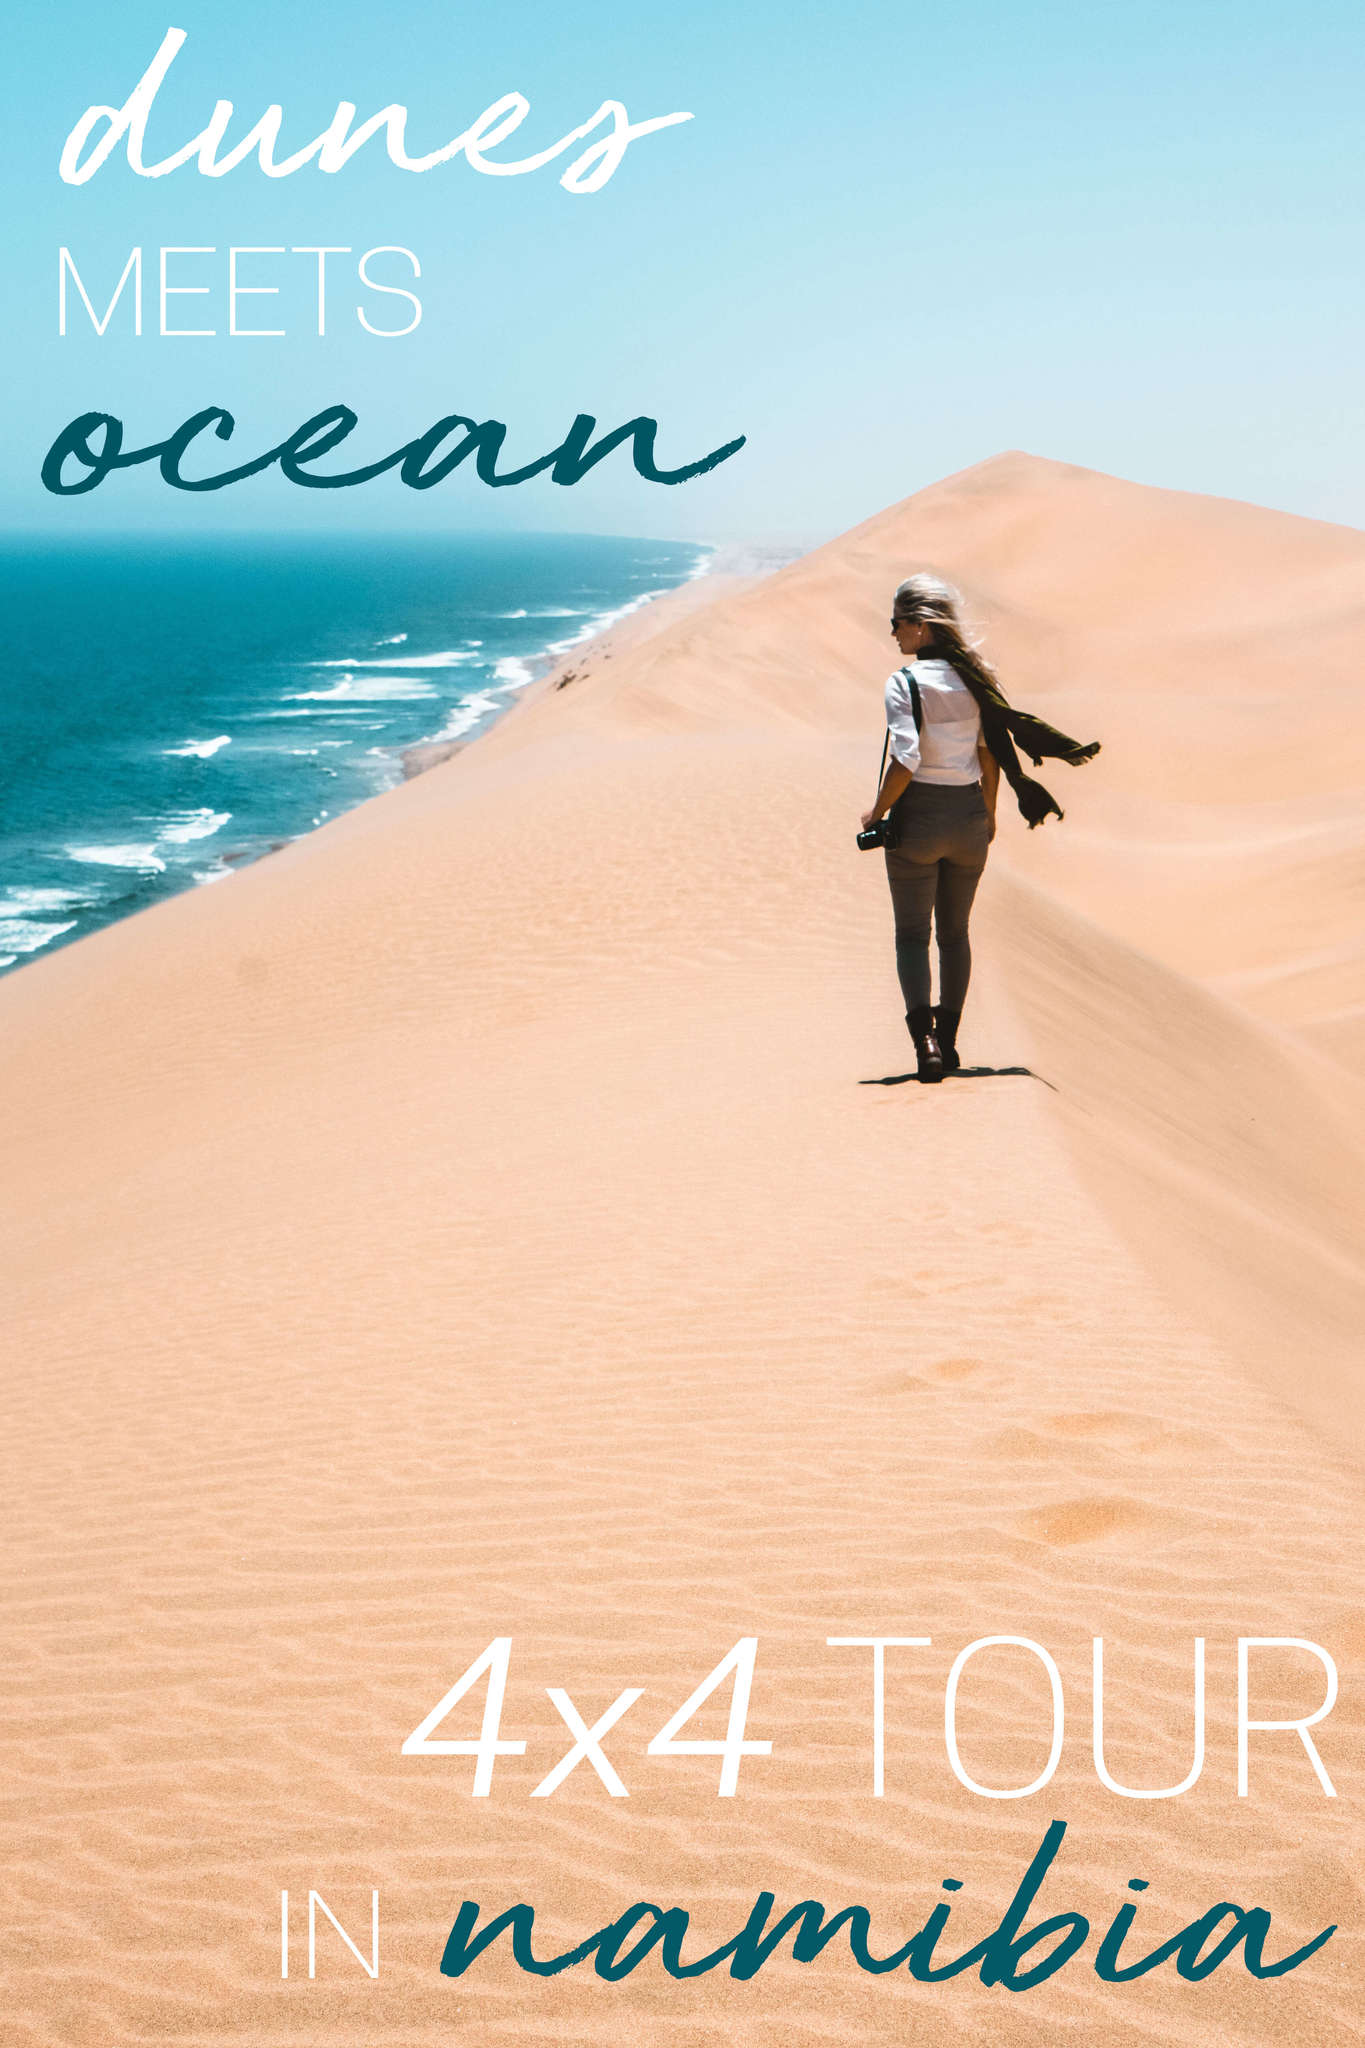 Dunes Meets Desert 4x4 Tour in Namibia